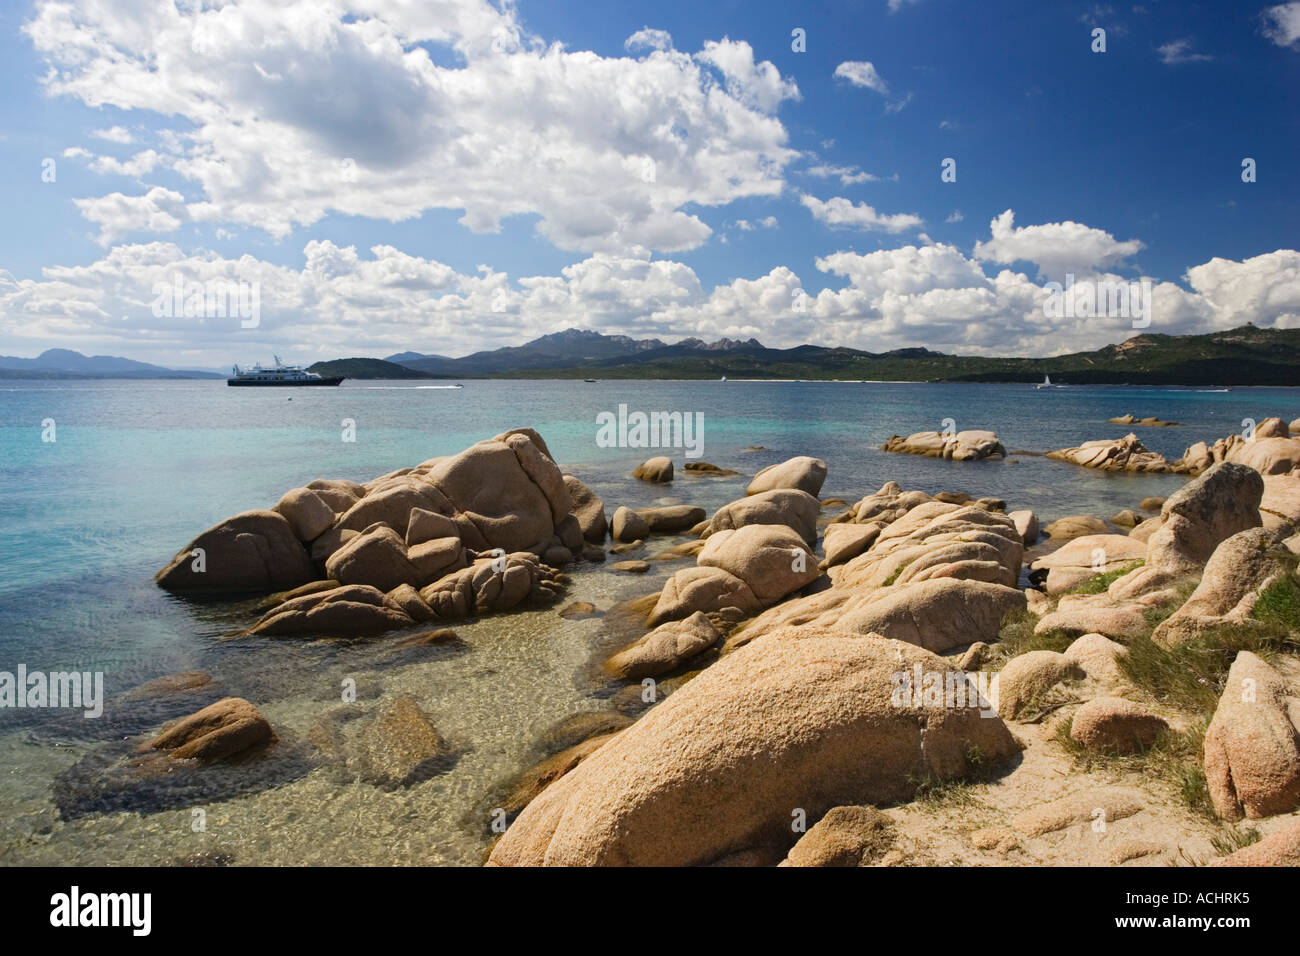 Spiaggia Capriccioli Costa Smeralda Sardinia Italy Stock Photo